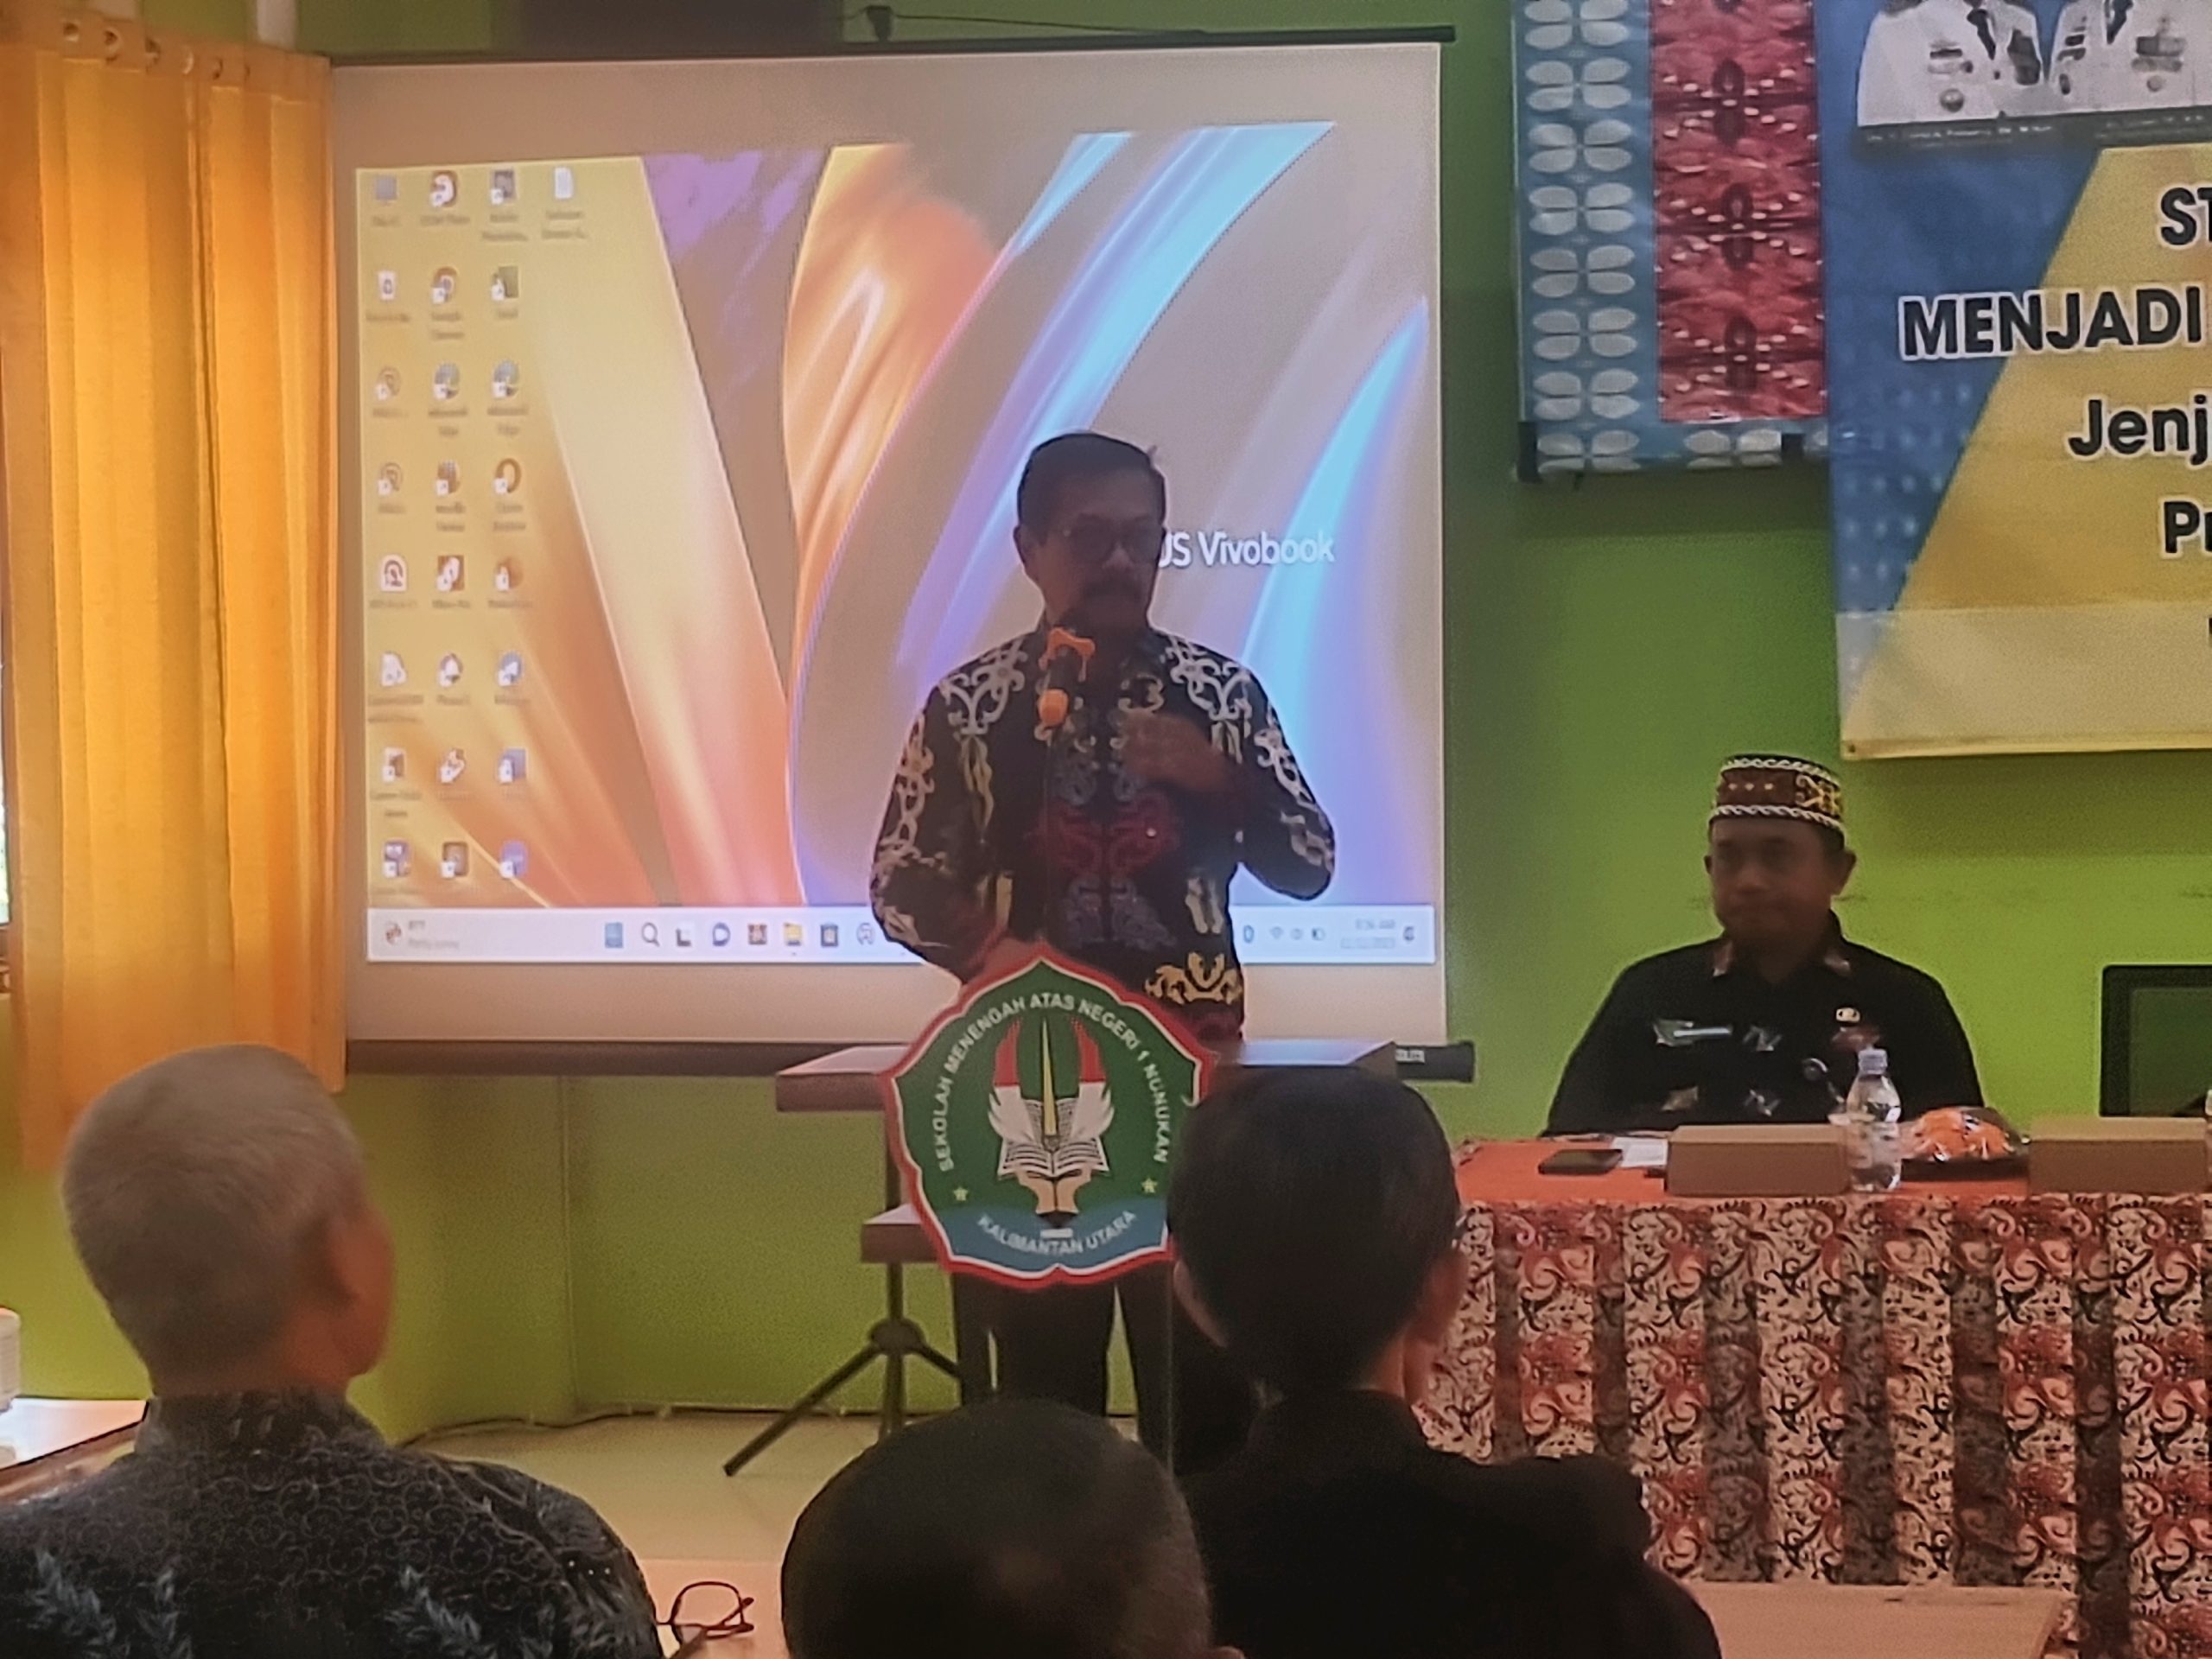 Kepala Dinas Pendidikan dan Kebudayaan Provinsi Kalimantan Utara, Drs. Tegun Hendri Sutanto, M.Pd.